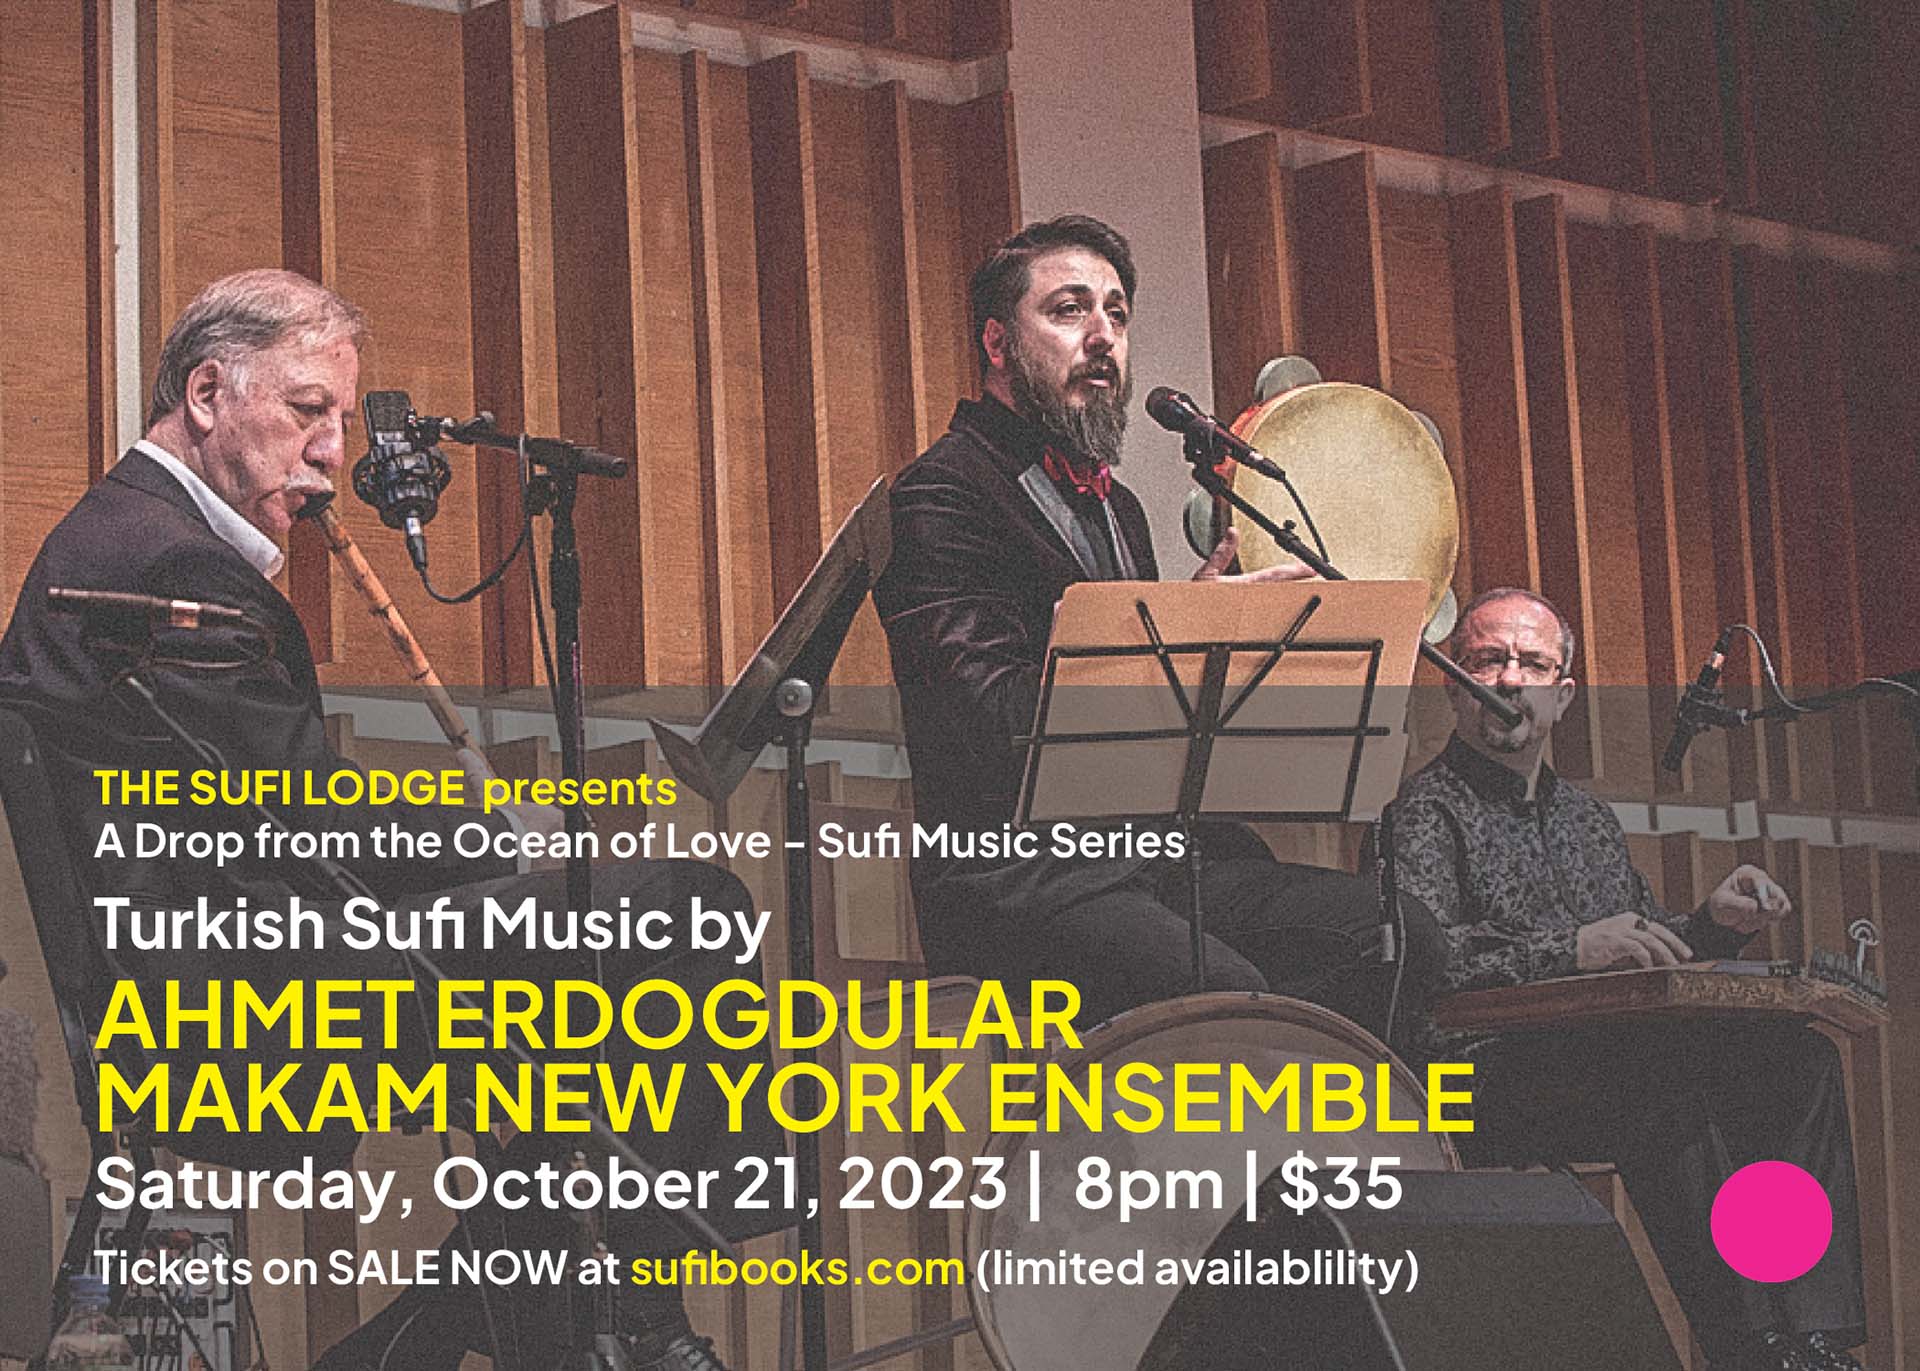 Saturday, October 21, 2023 | Turkish Sufi Music by Ahmet Erdogdular (Makam New York Ensemble) | 8 pm | $35